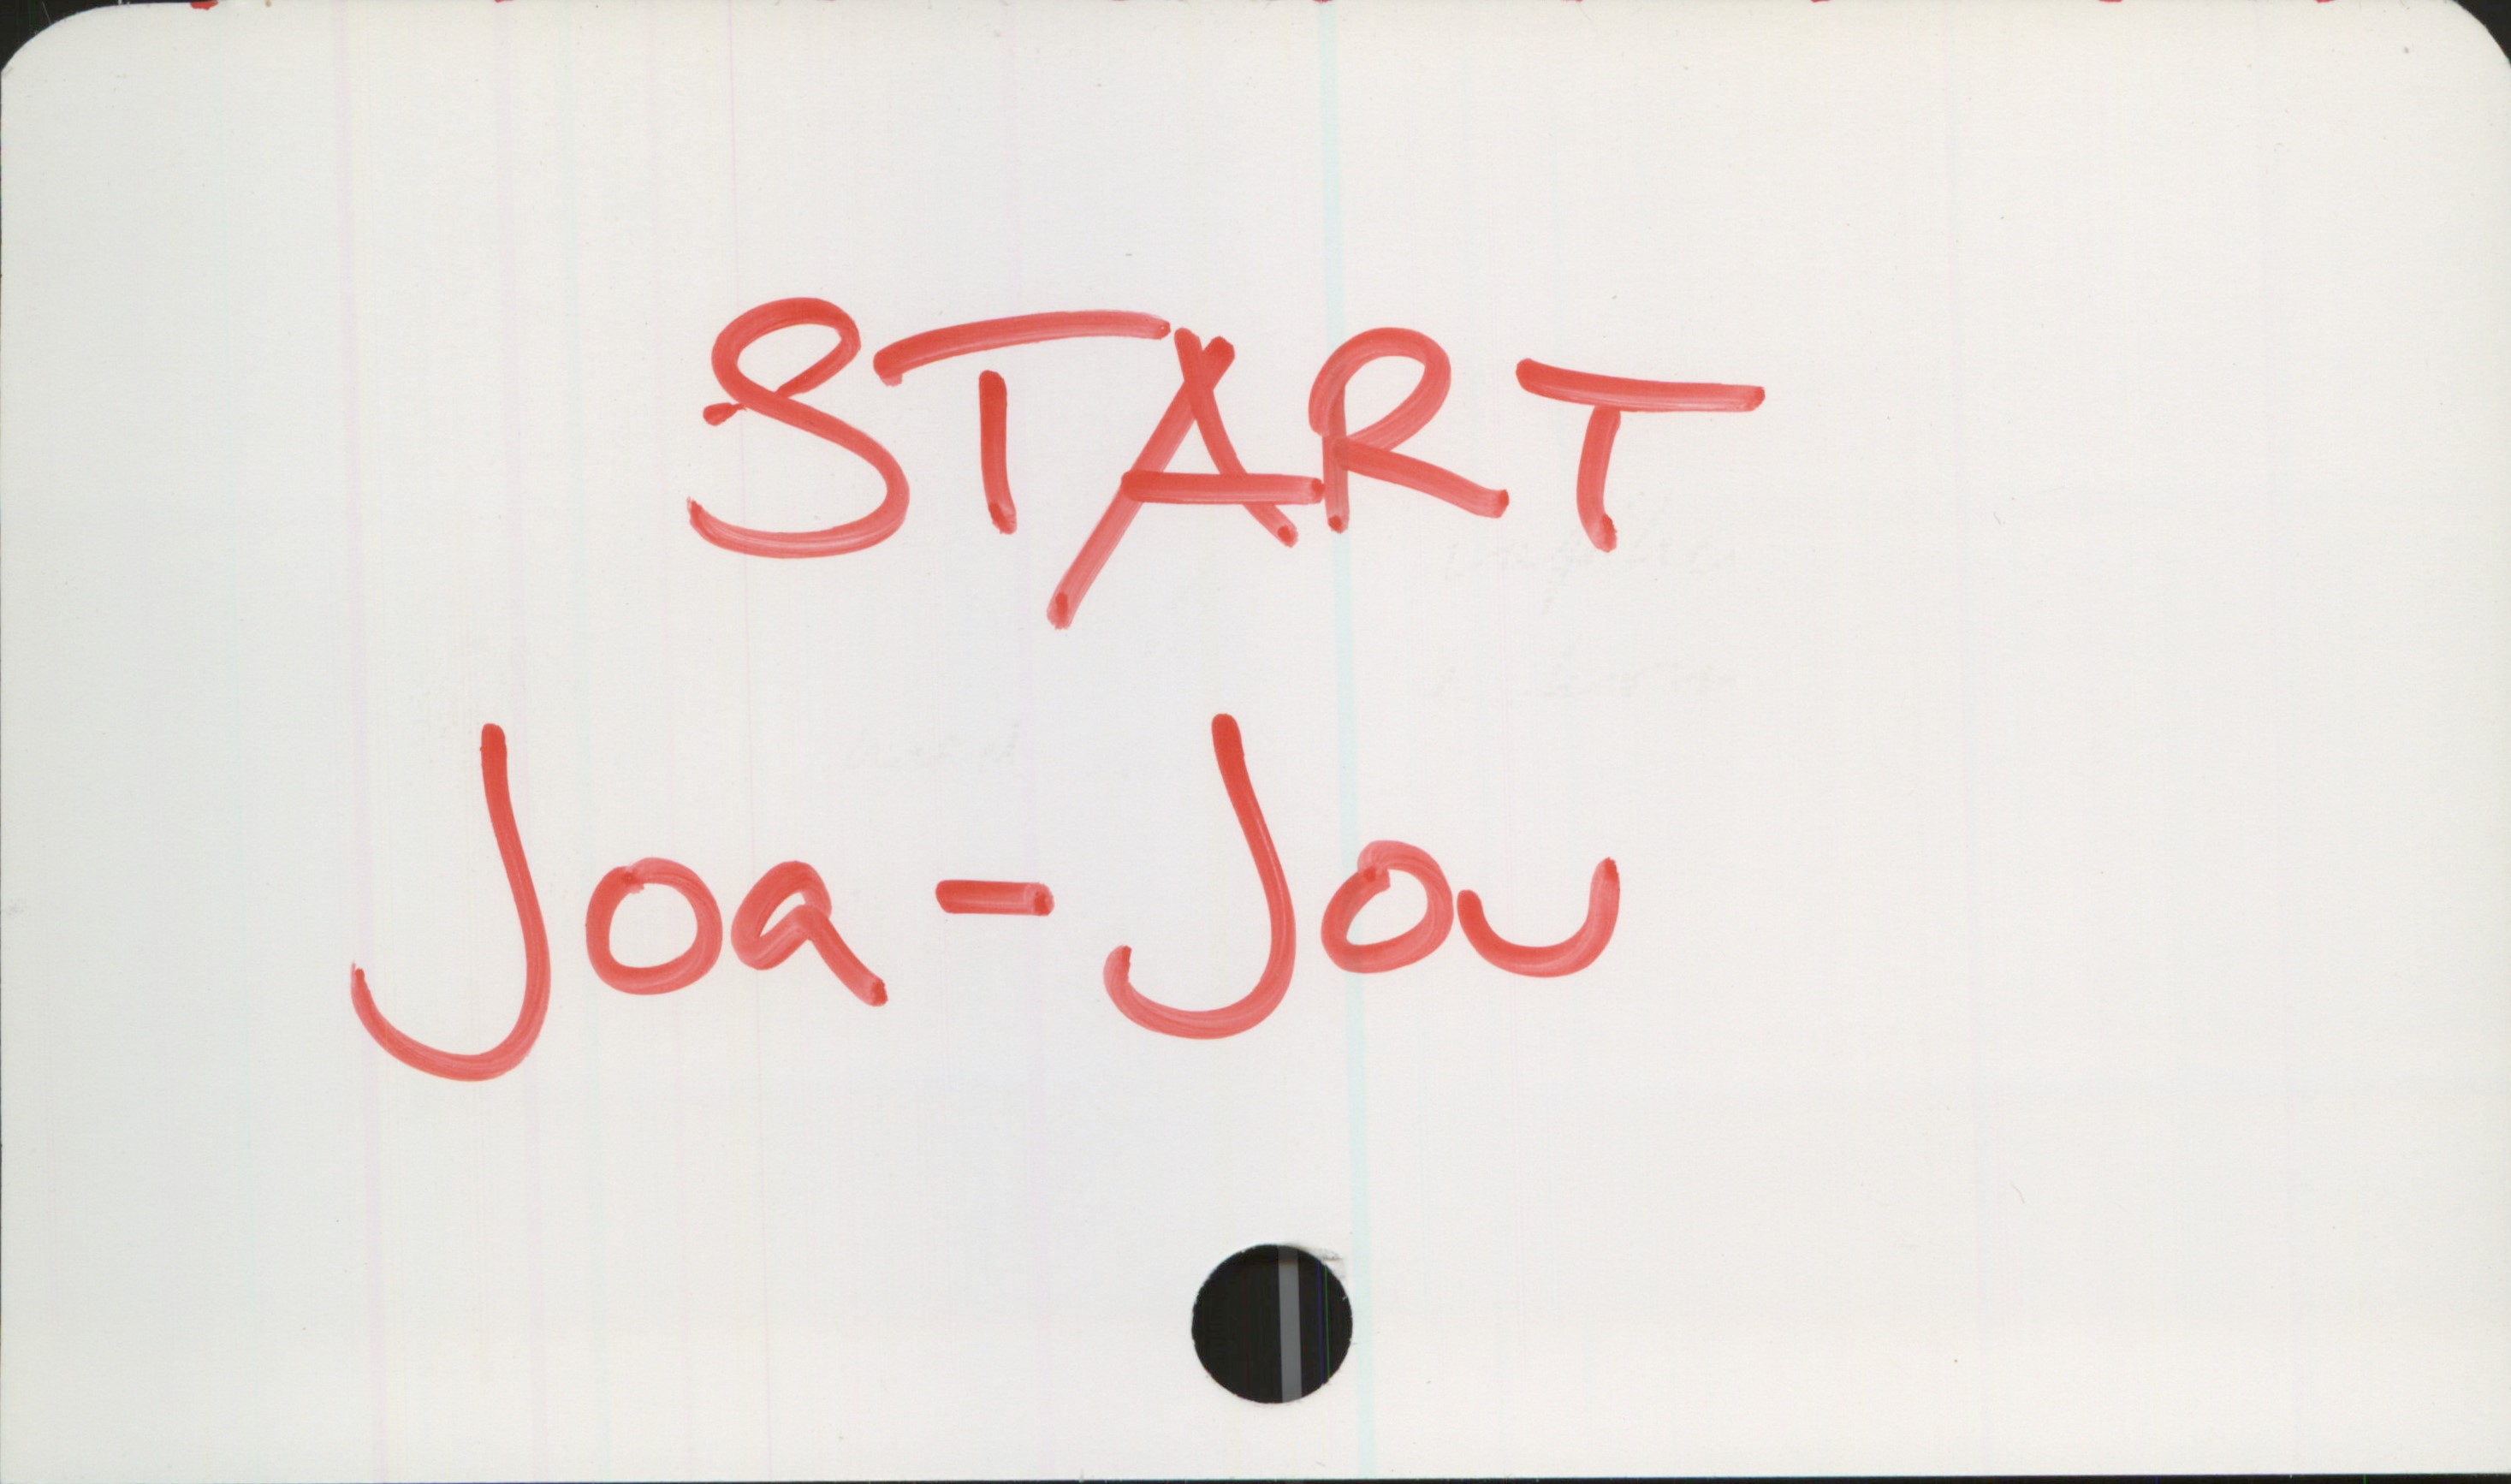 START  Joa-Jou START

Joa-Jou